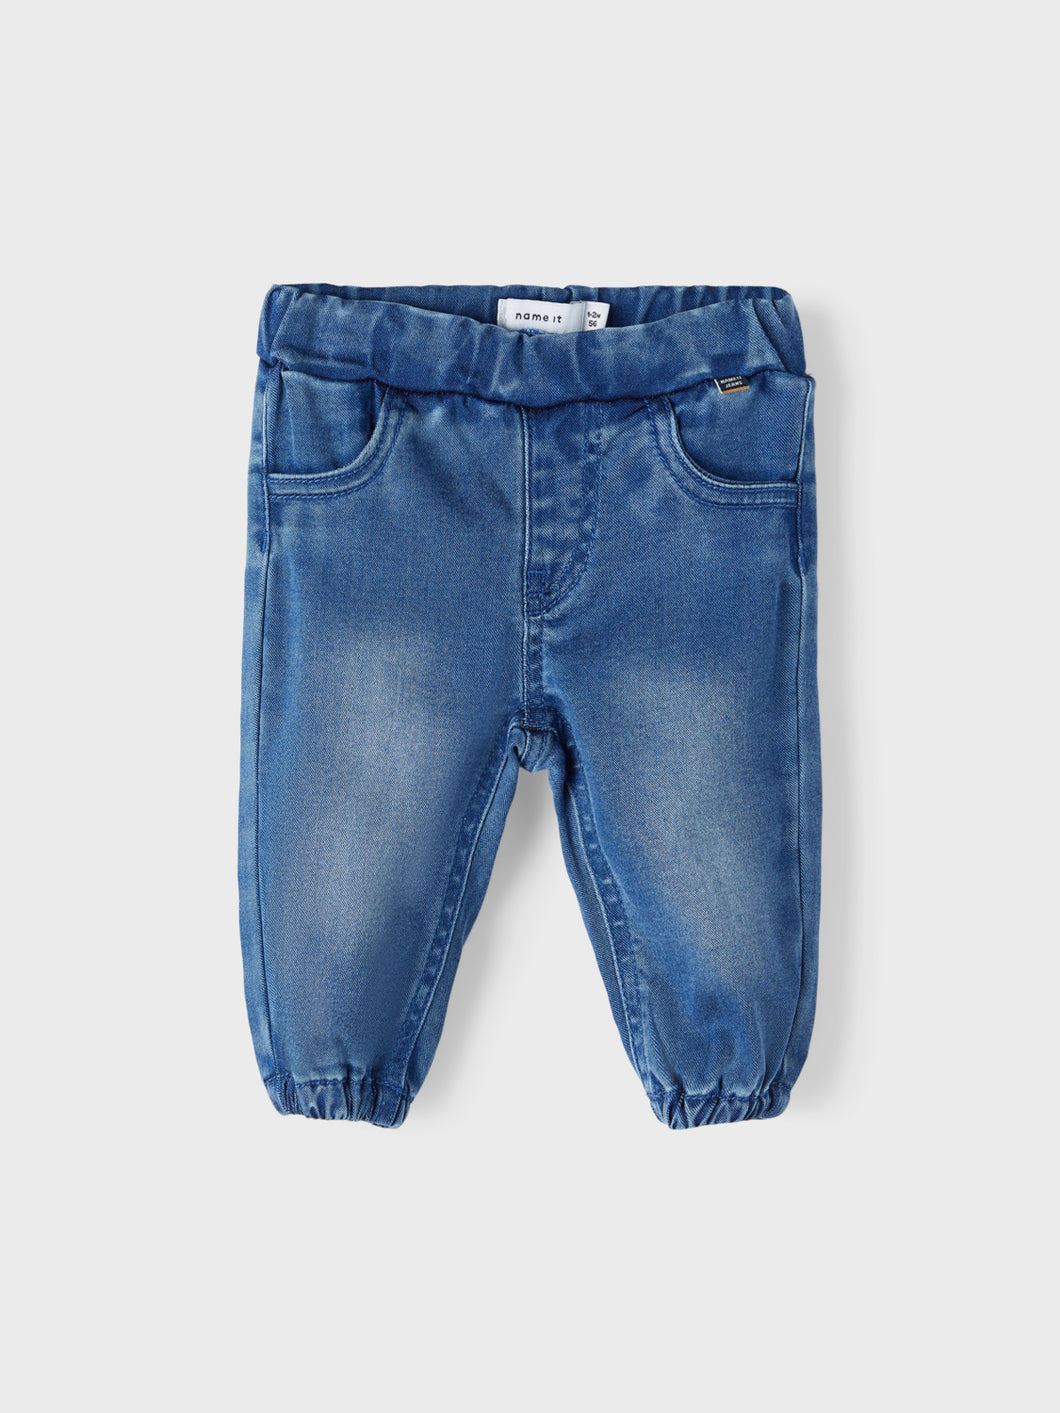 NBNBERLIN Jeans - Medium Blue Denim